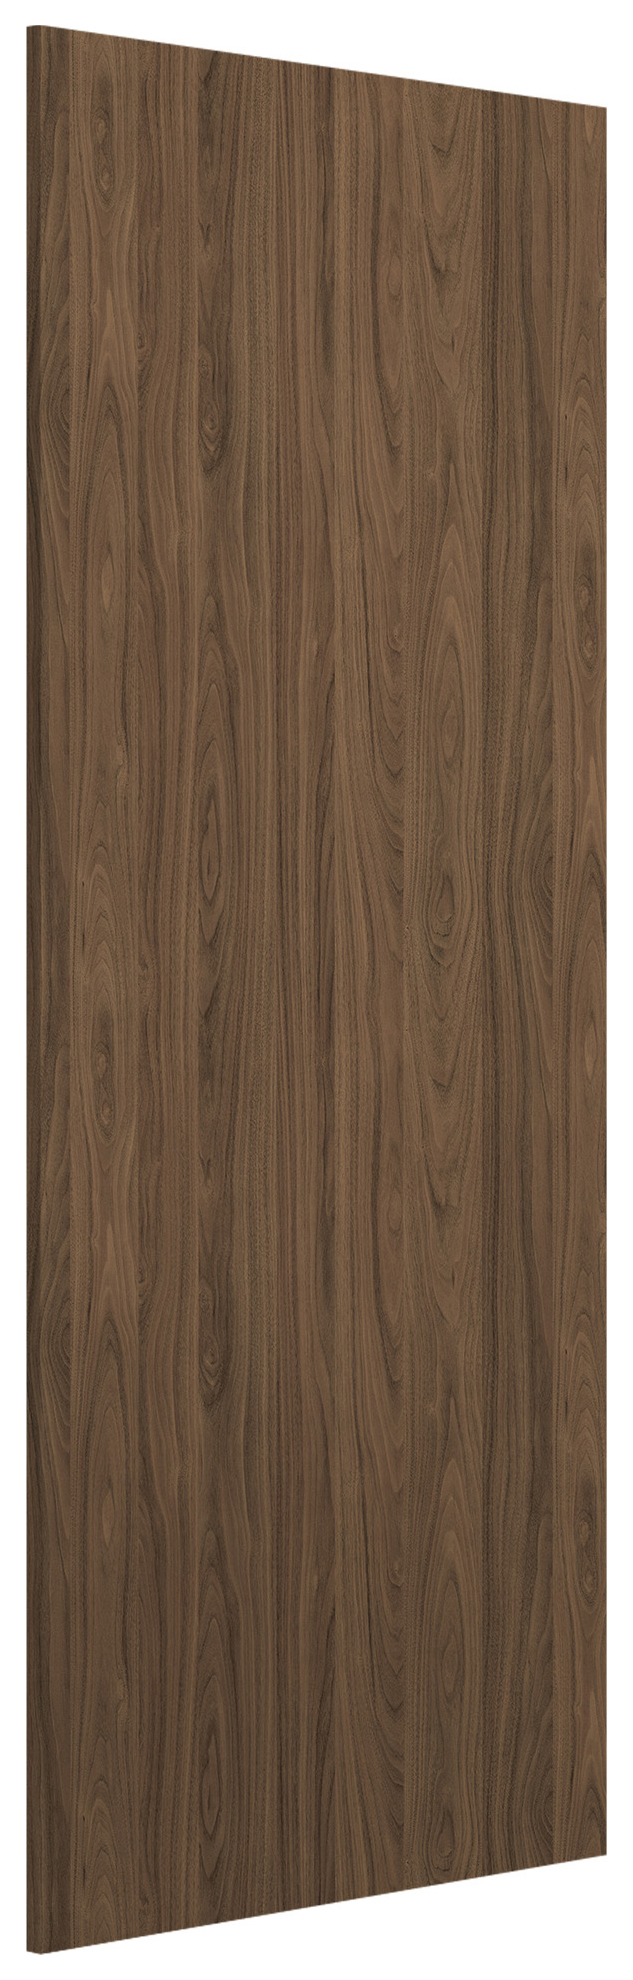 Image of Spacepro Wardrobe End Panel Carini Walnut - 2800mm x 620mm x 18mm with Fixing Blocks